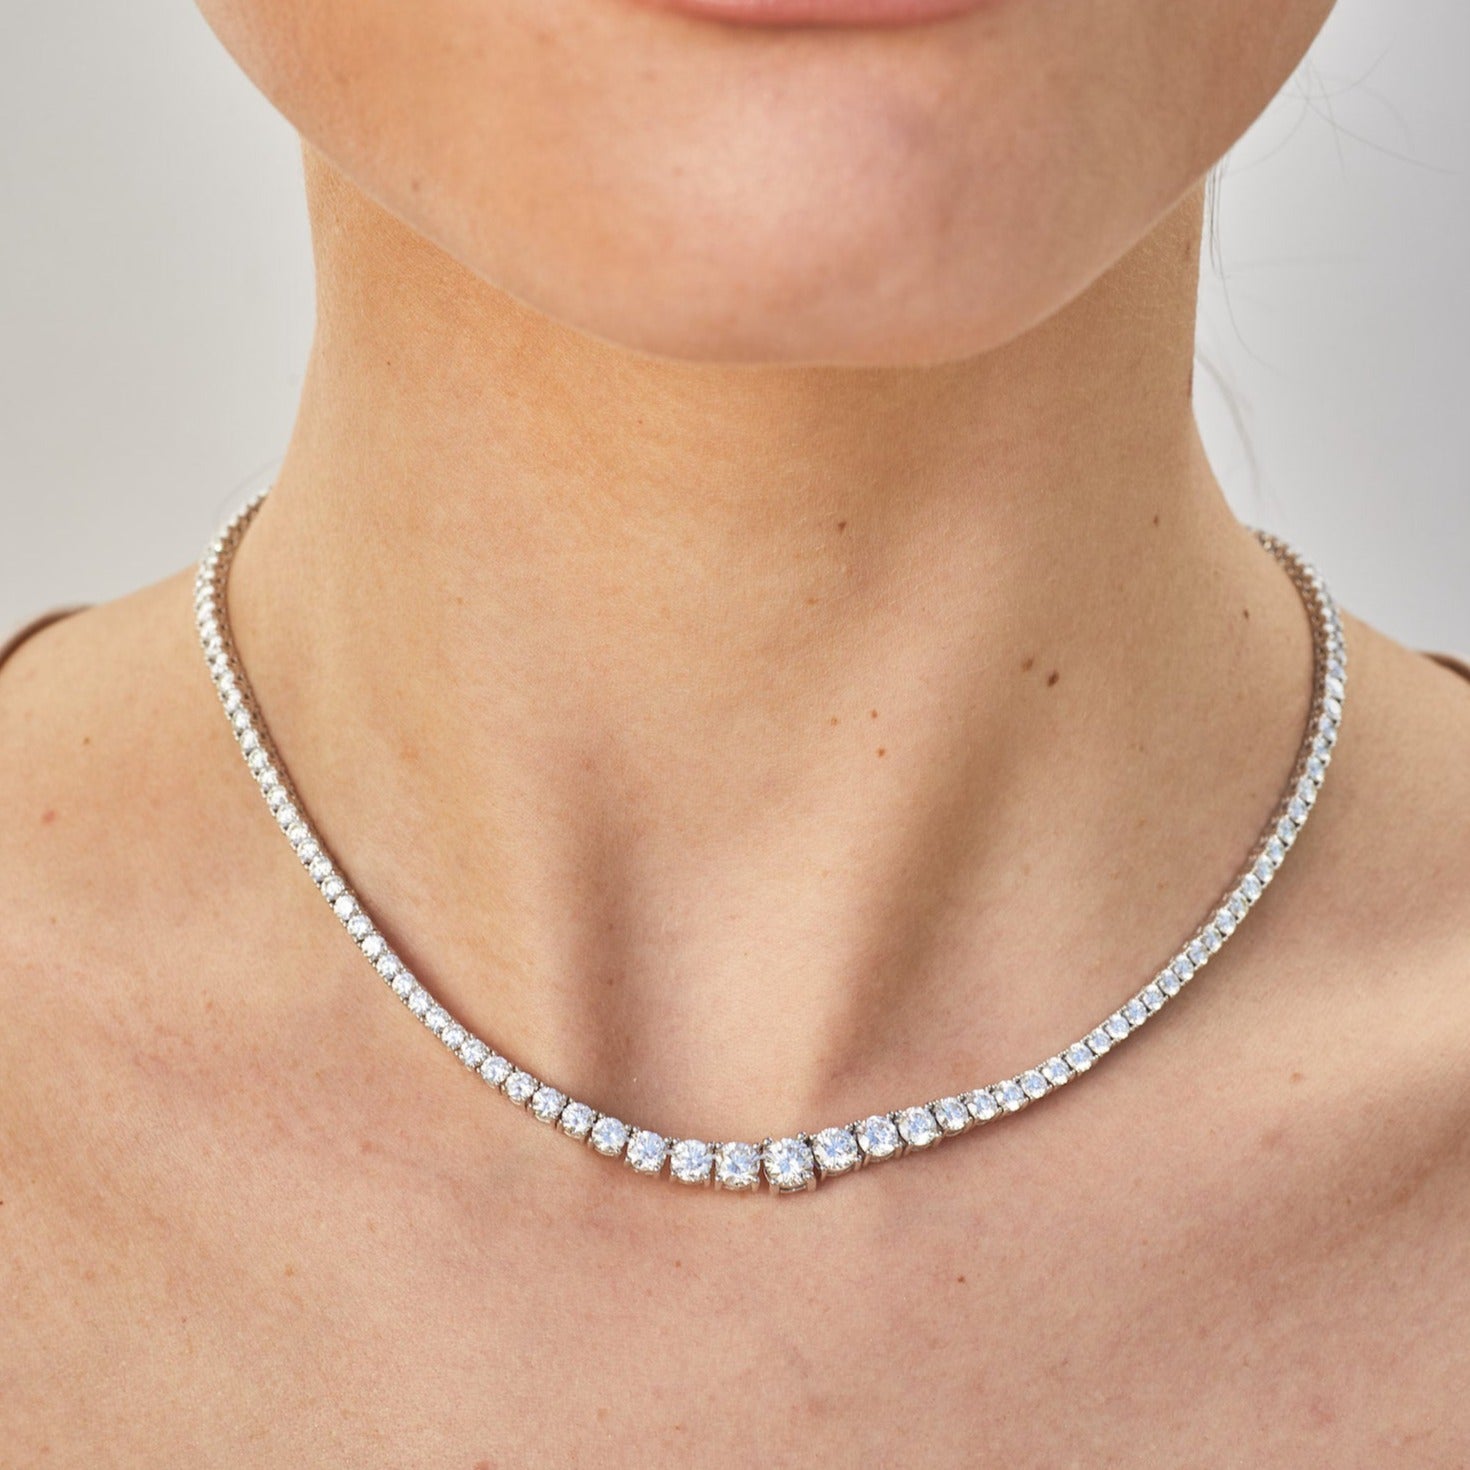 Buy Diamond Riviera Necklace Online in India - Etsy